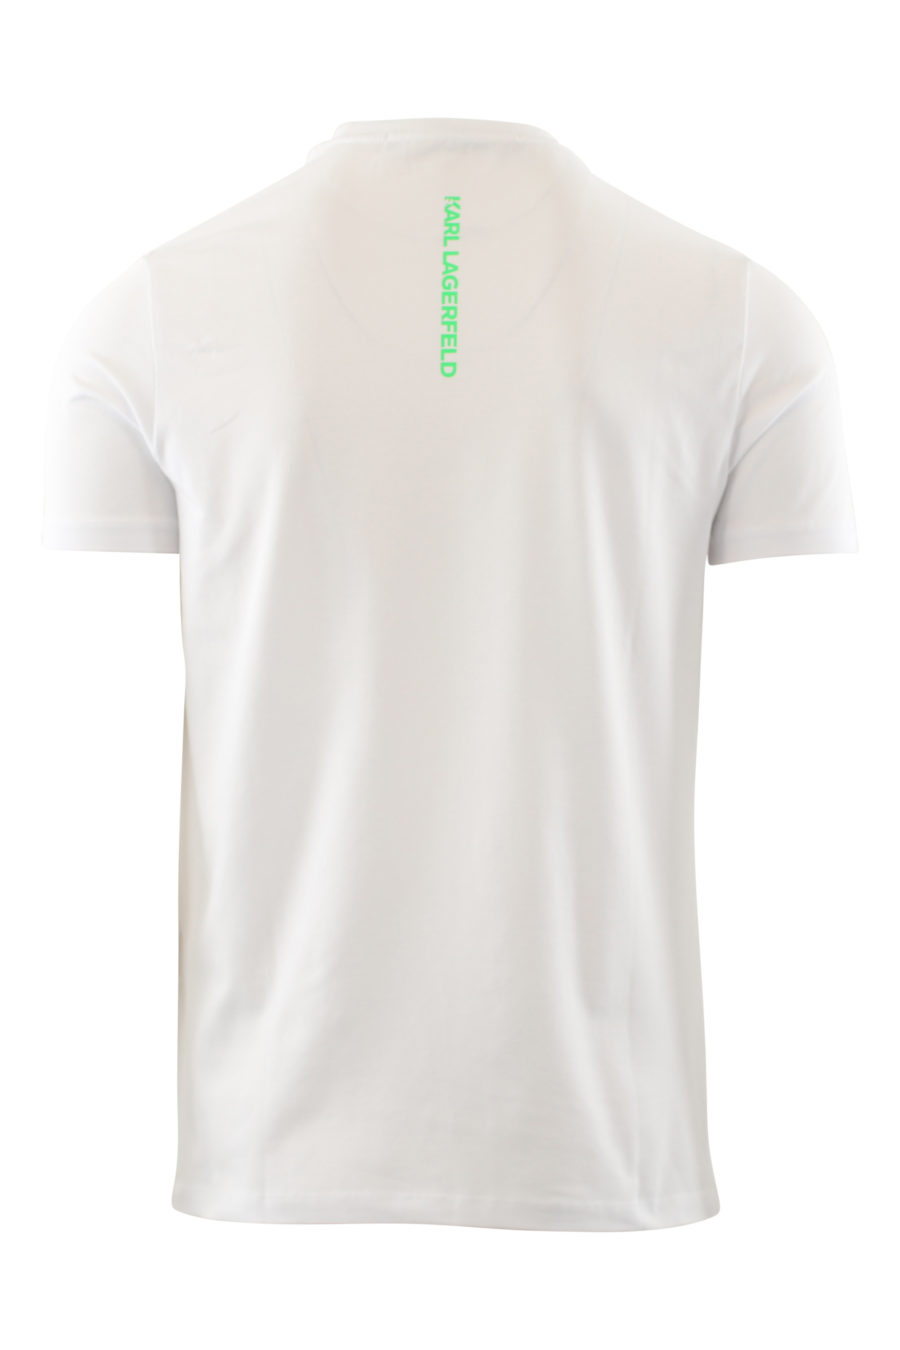 T-shirt blanc avec logo multicolore - IMG 6524